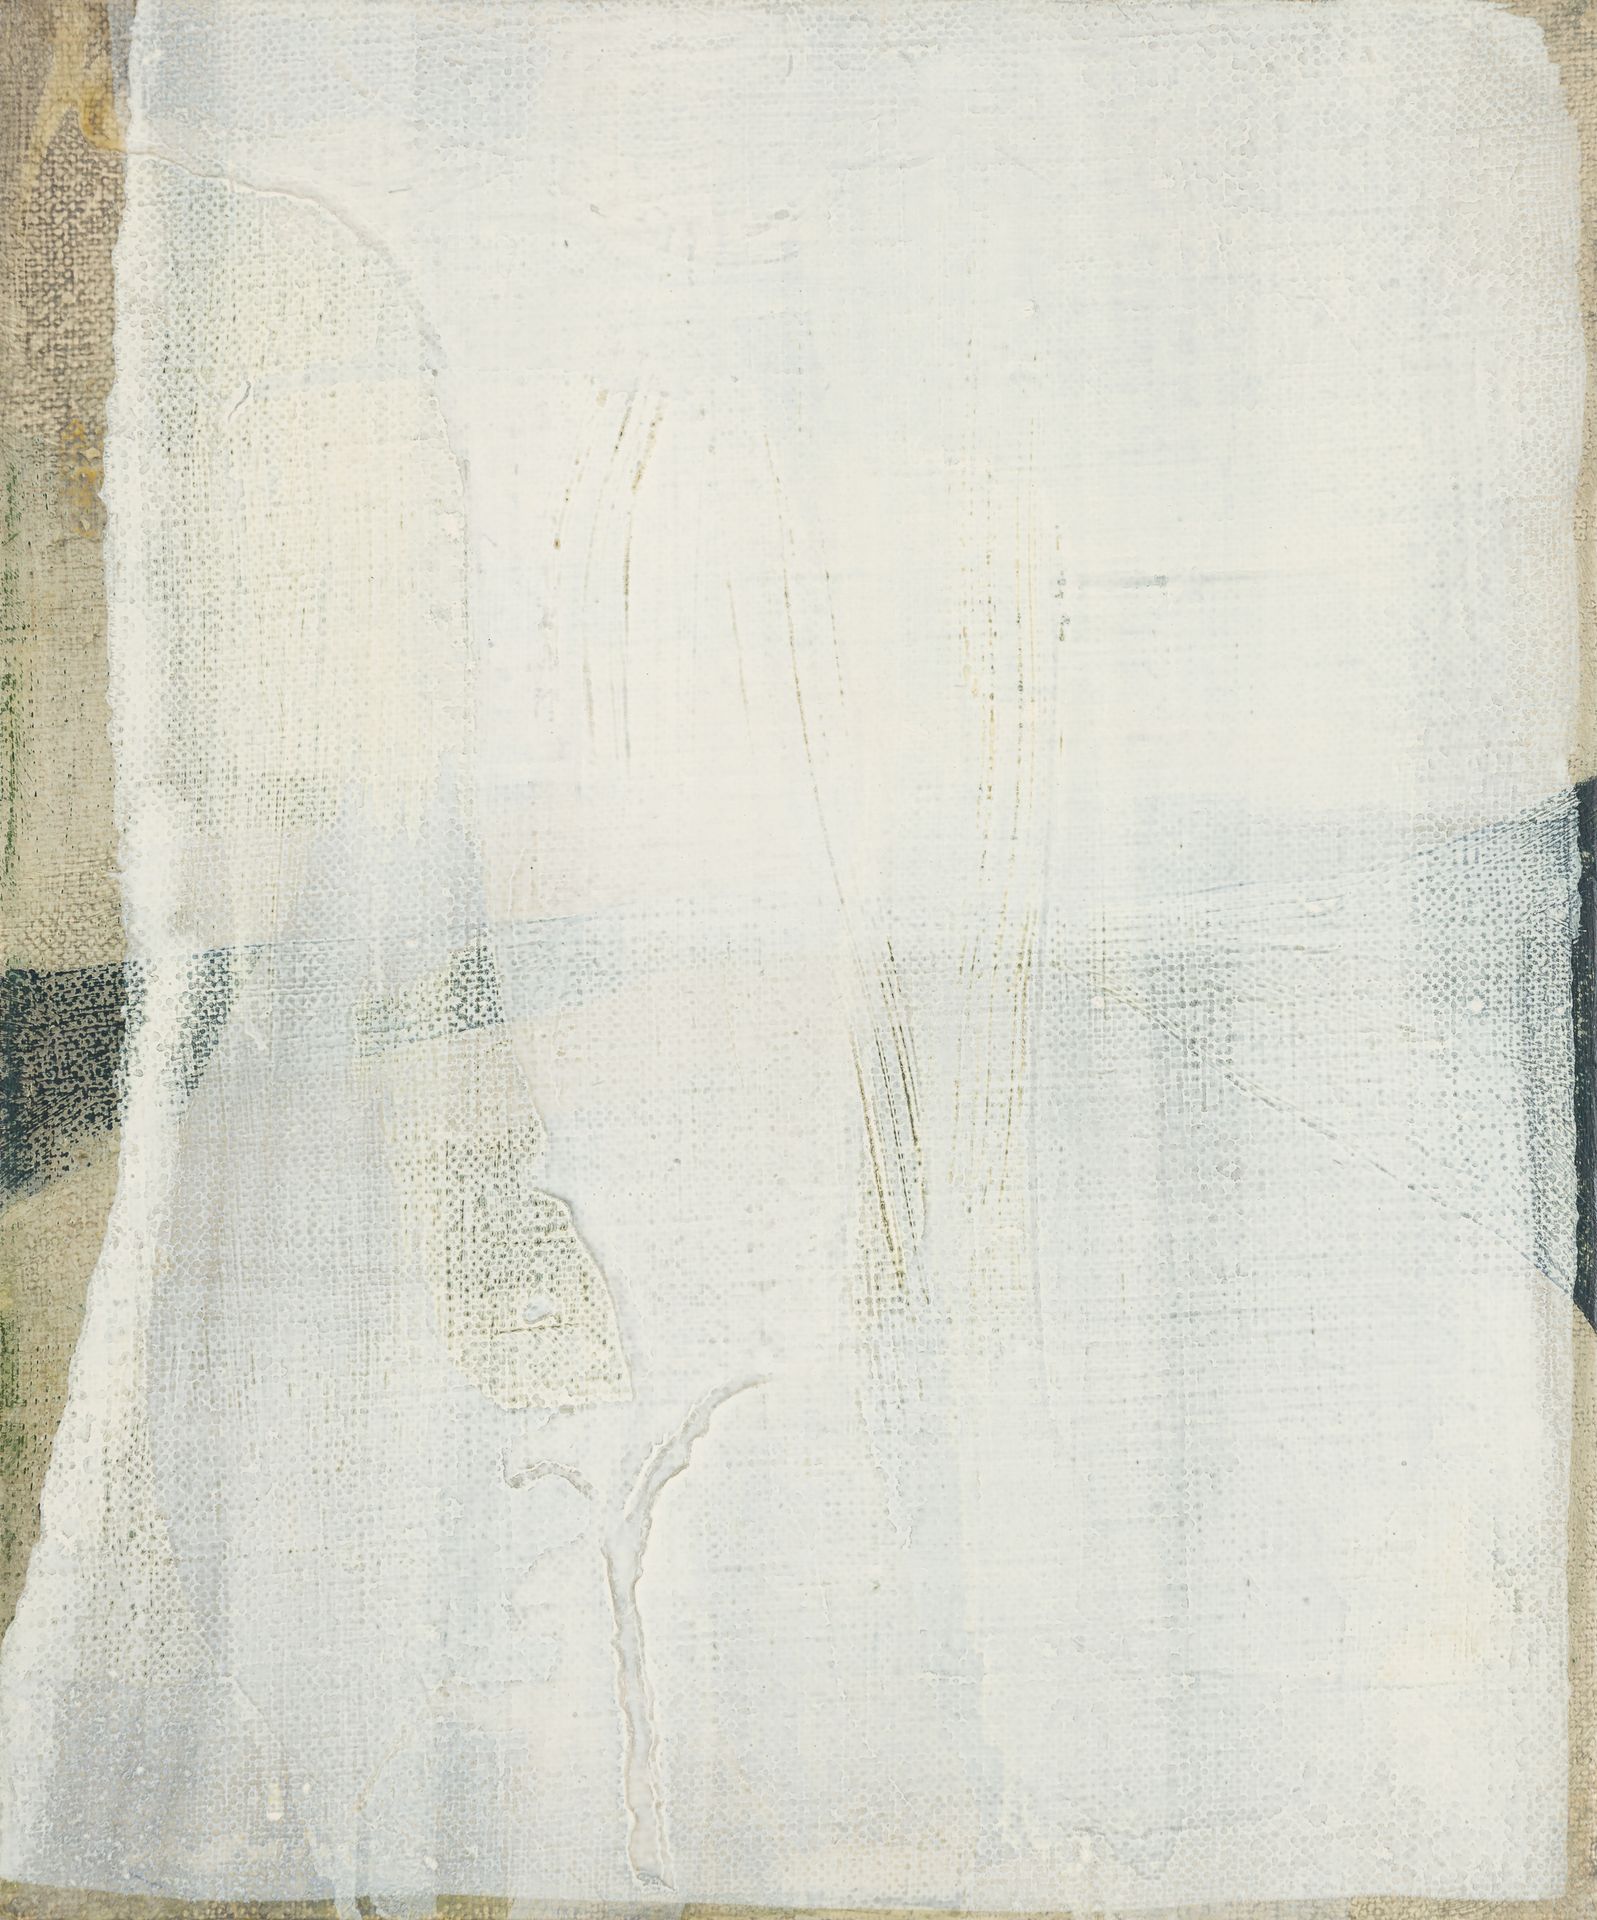 Bohatsch, Erwin 抽象 I, 1969年
布面油画
背面有签名和日期
30 x 25 cm